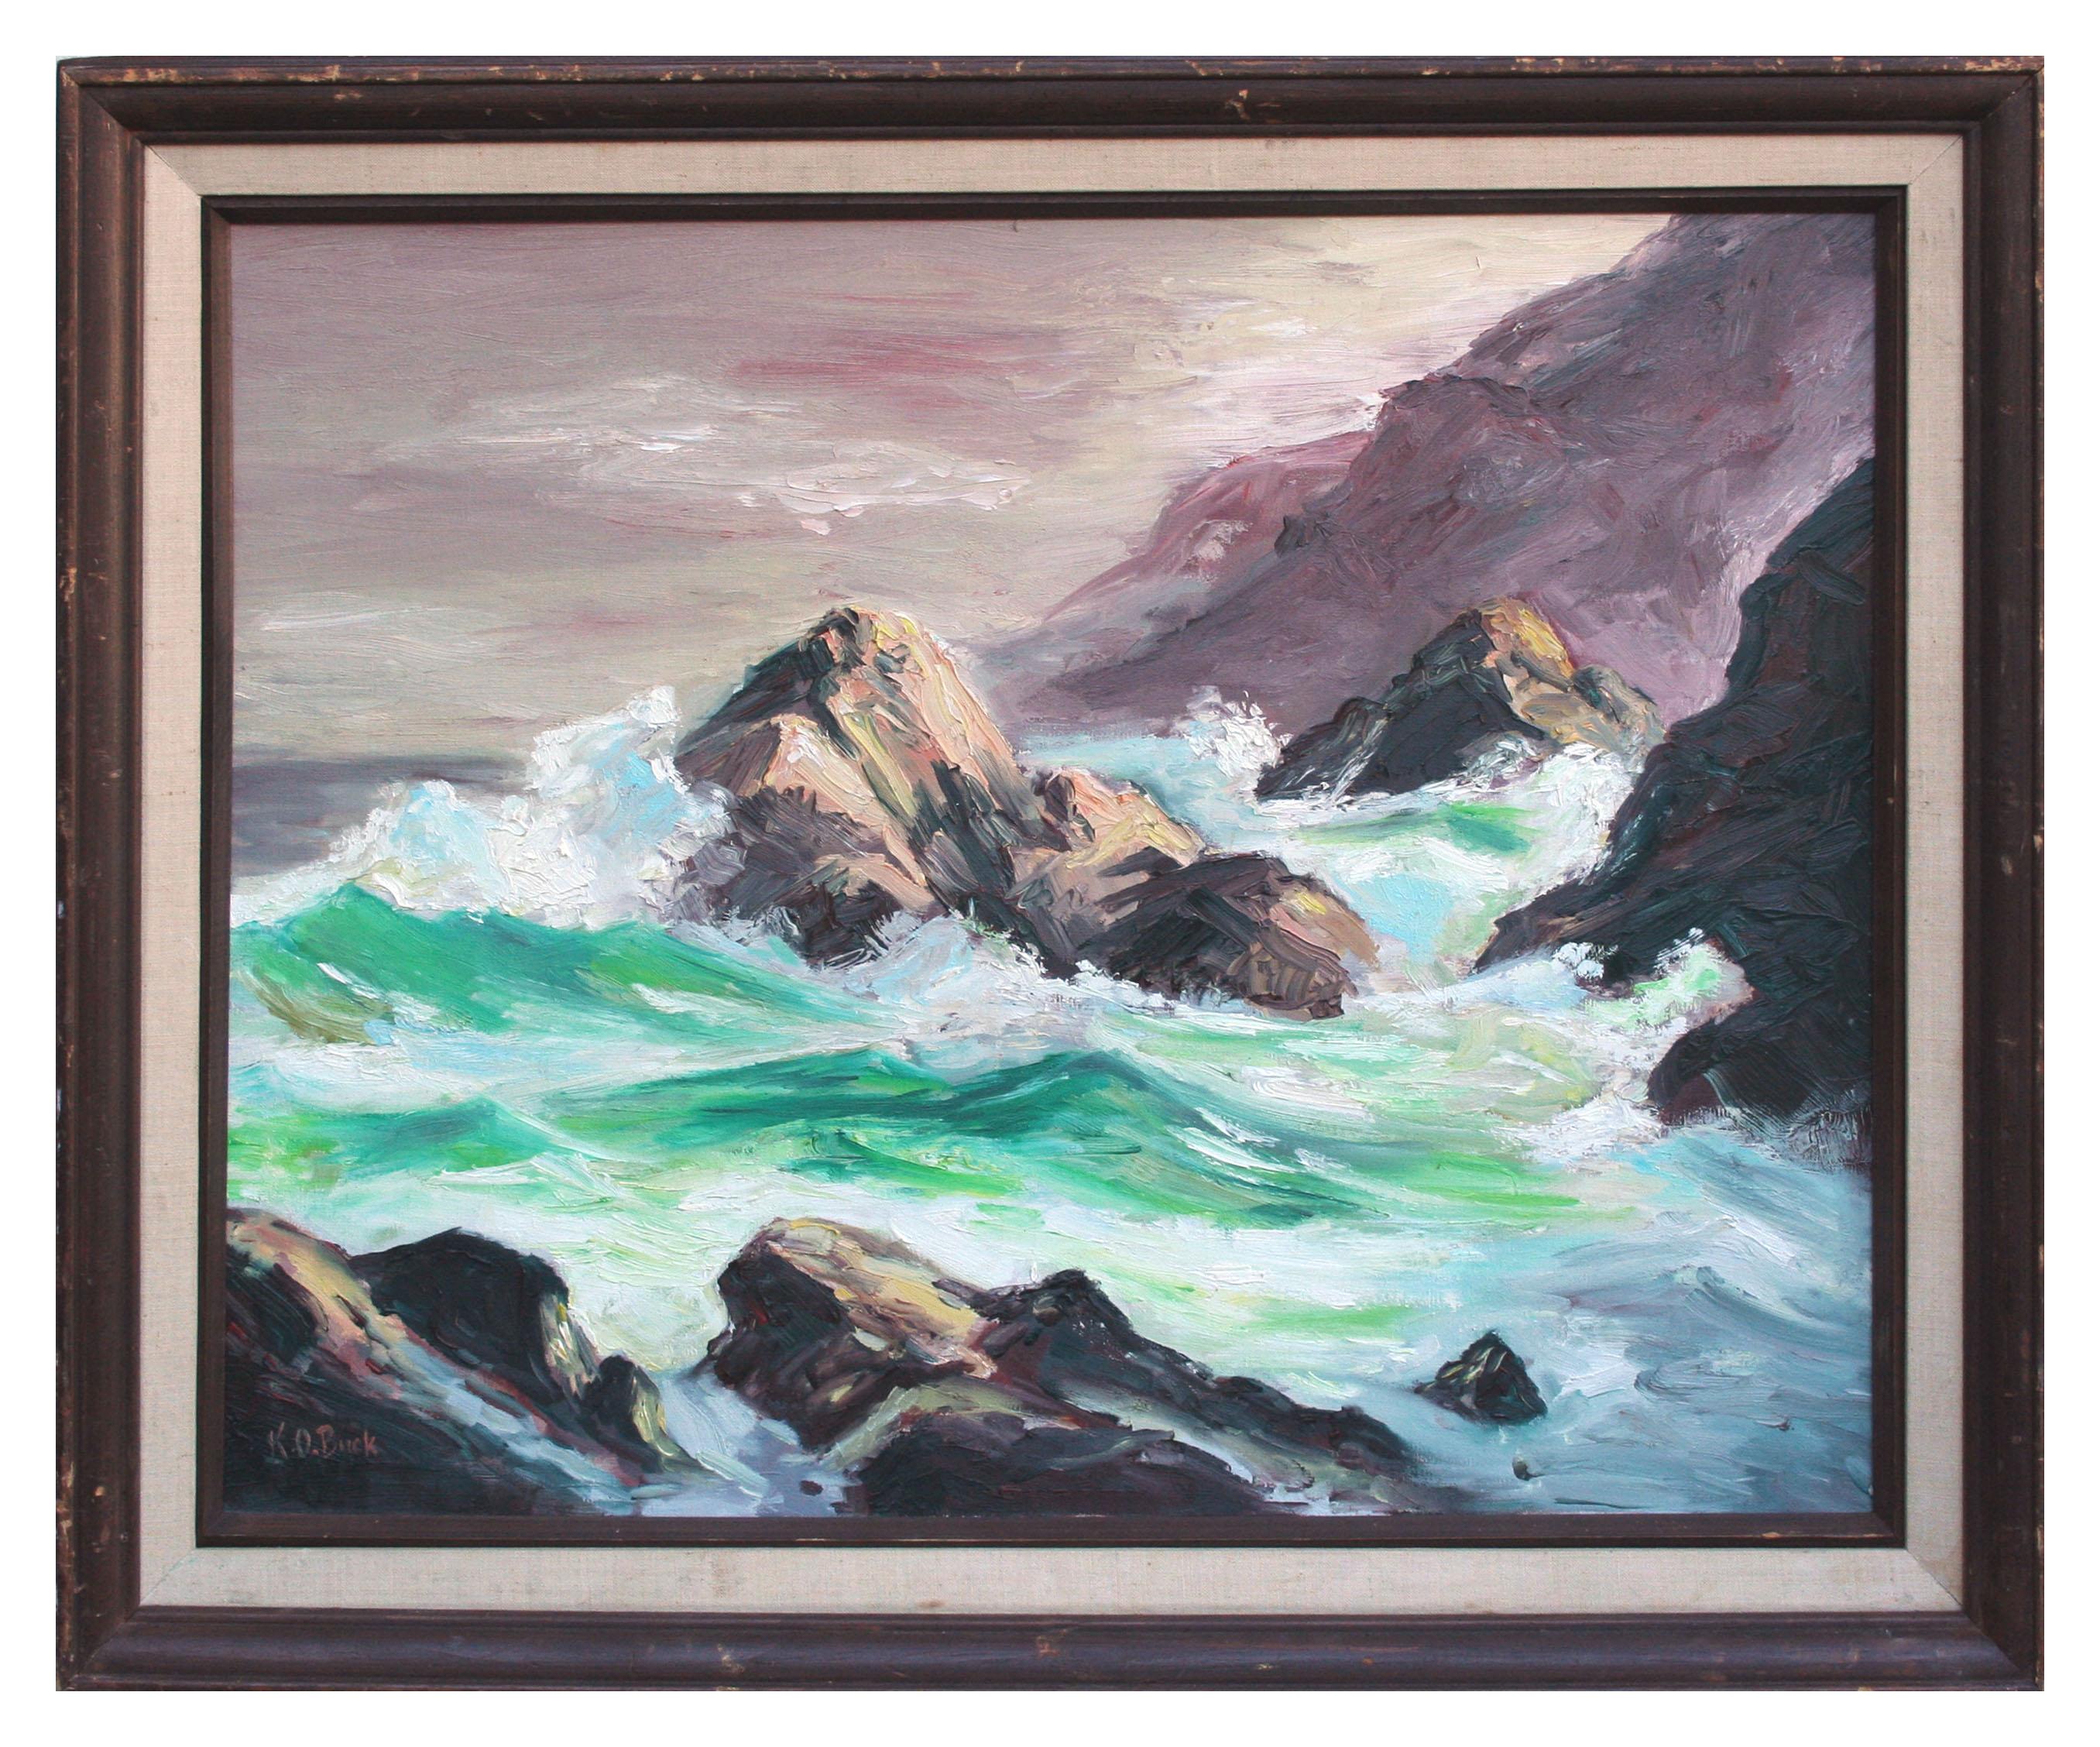 K.O. Buck Landscape Painting – California Coastal Waves Seascape Original Öl auf Leinwand